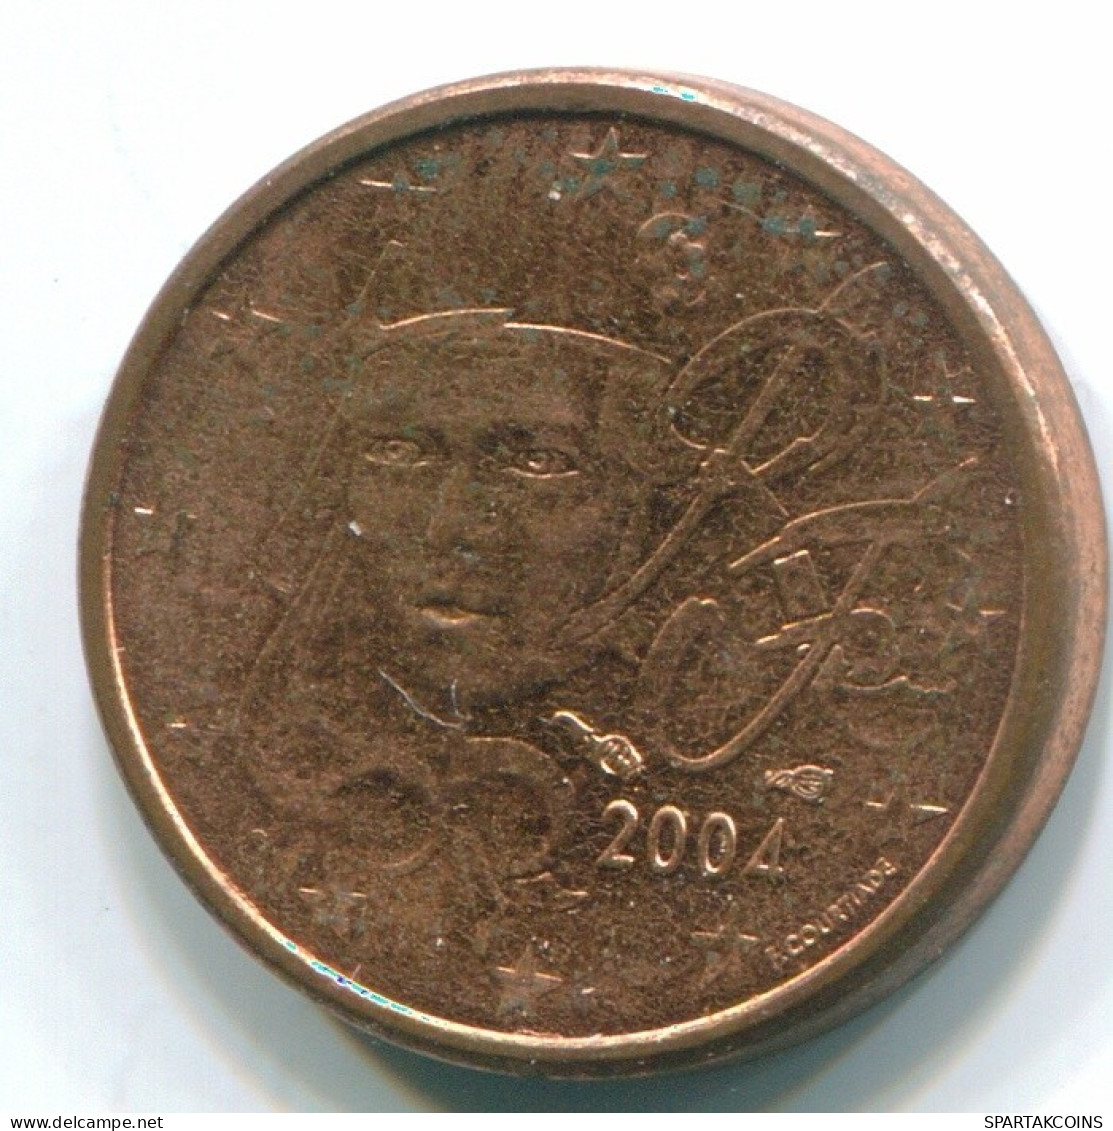 1 EURO CENT 2004 FRANKREICH FRANCE Französisch Münze UNC #FR1236.1.D.A - Frankreich